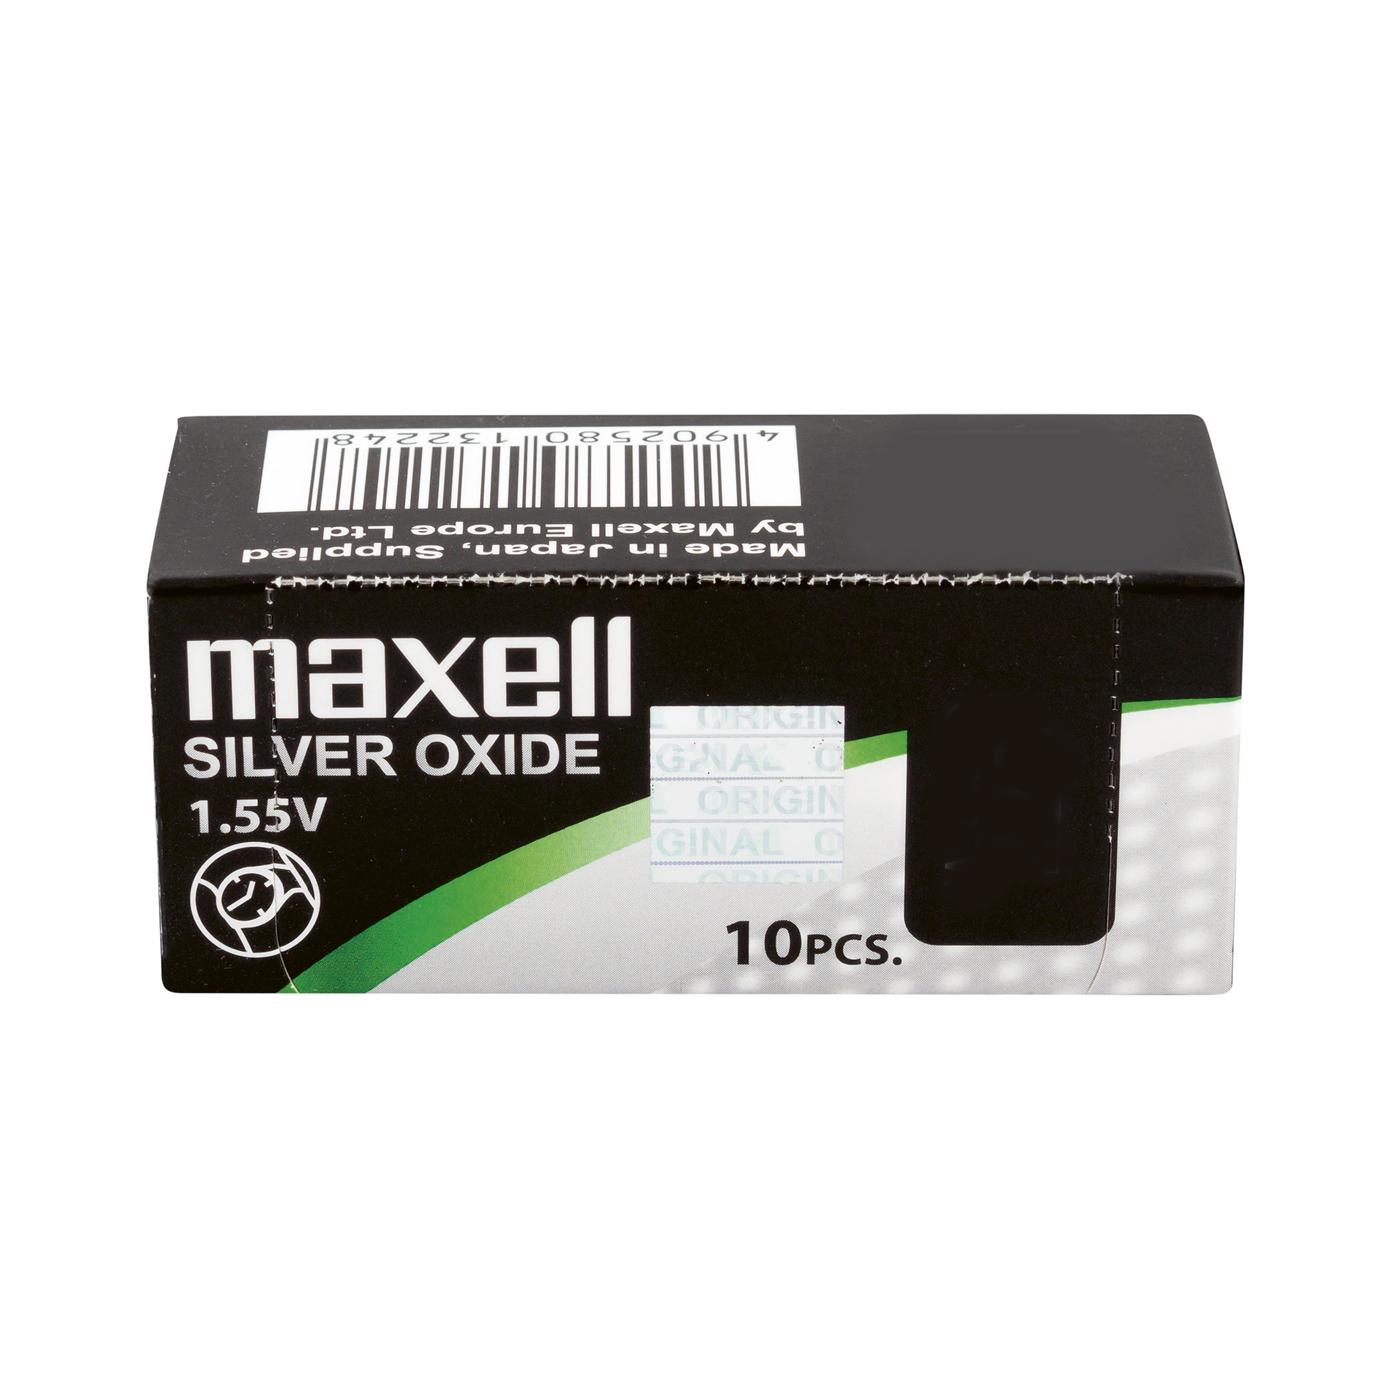 Maxell Uhrenbatterien 361, SR 721 W - 10 Stück